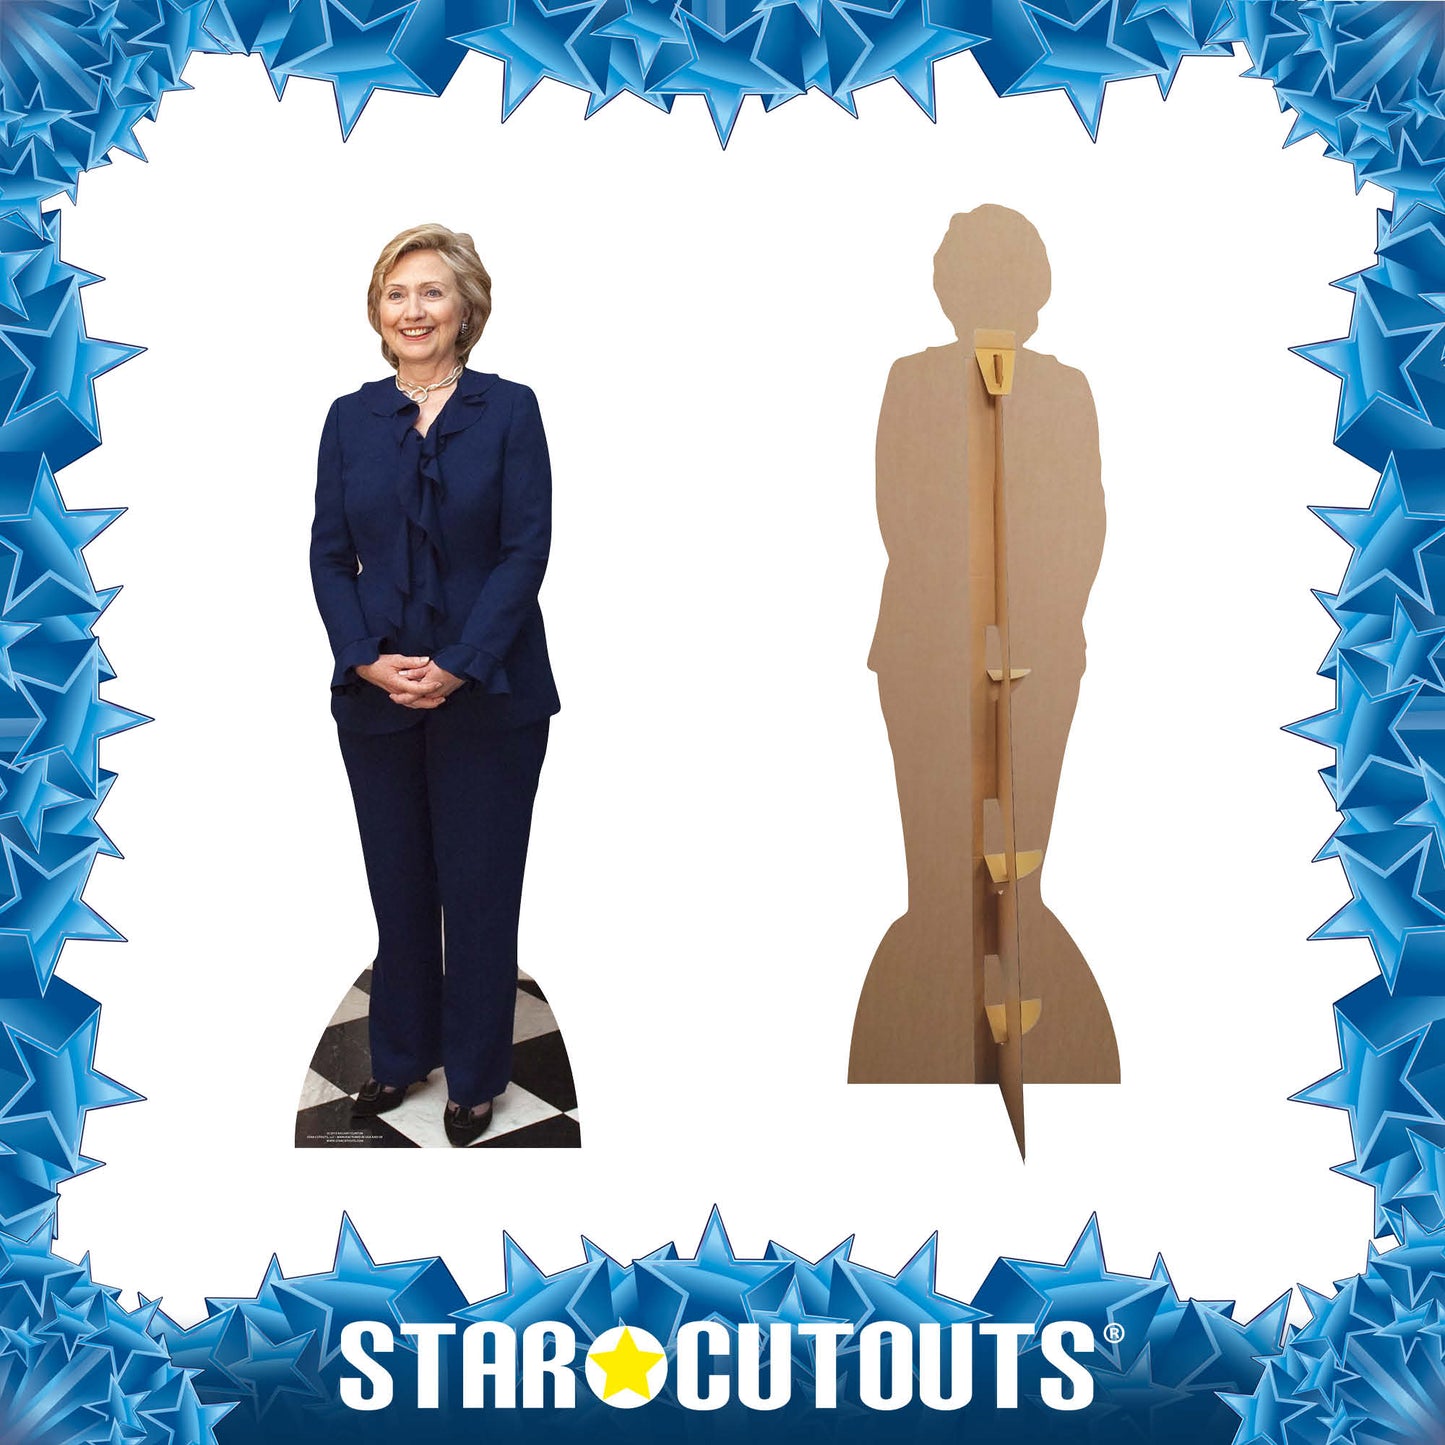 Hillary Clinton Cardboard Cutout Politician